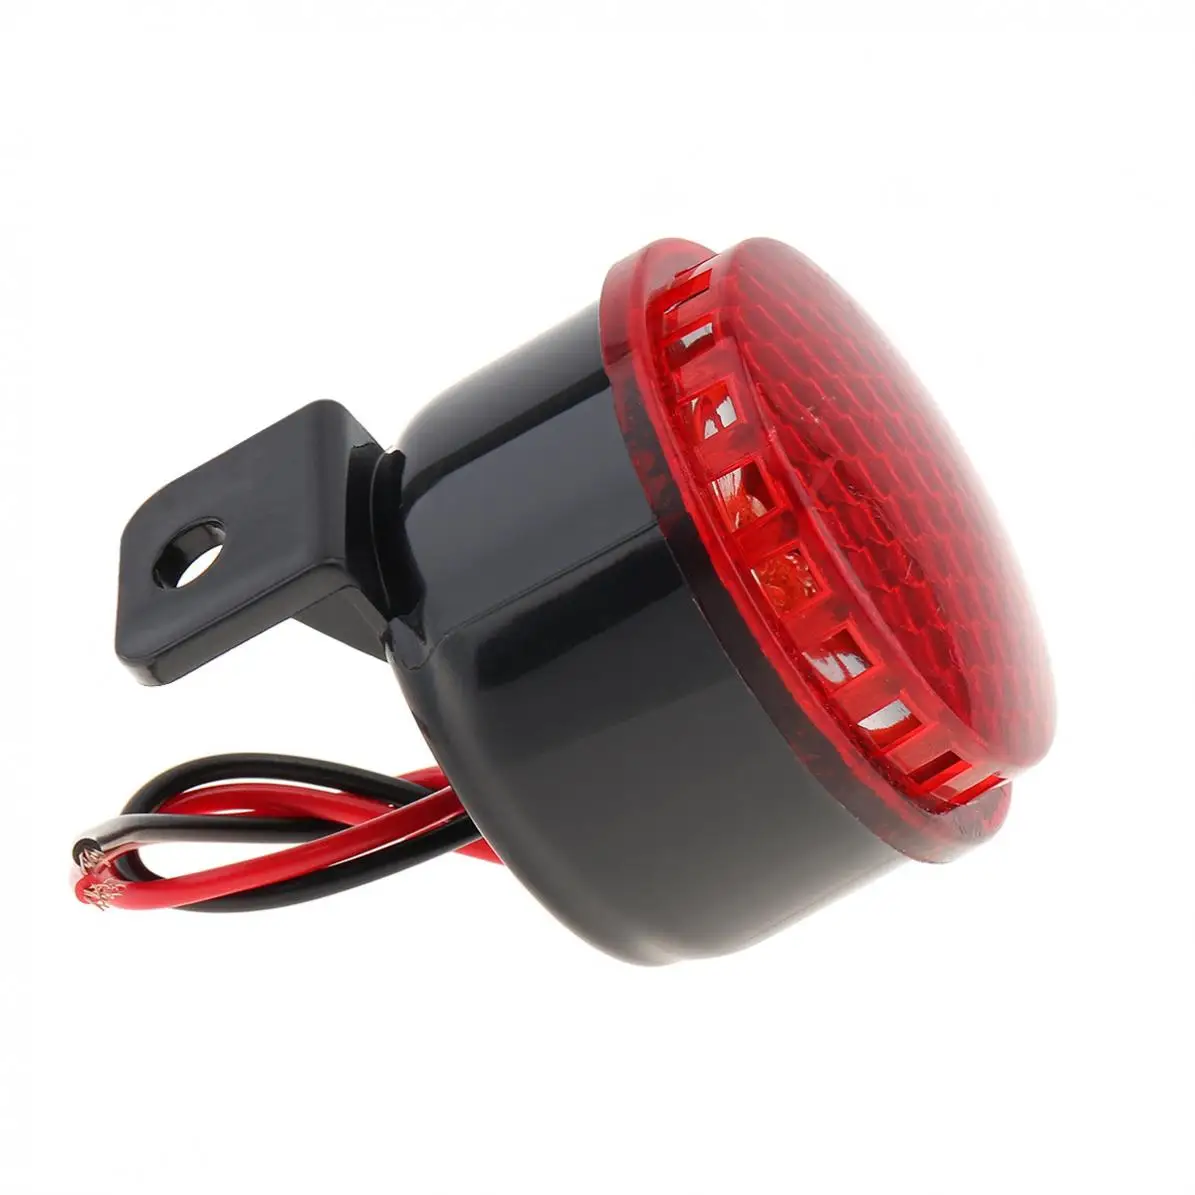 GZLMMY 12V 6 Tones Car Reversing Alarm Horn Speaker Beeper Buzzer Durable Motorcycle Warning Brakes Horn with Red LED Light 1 